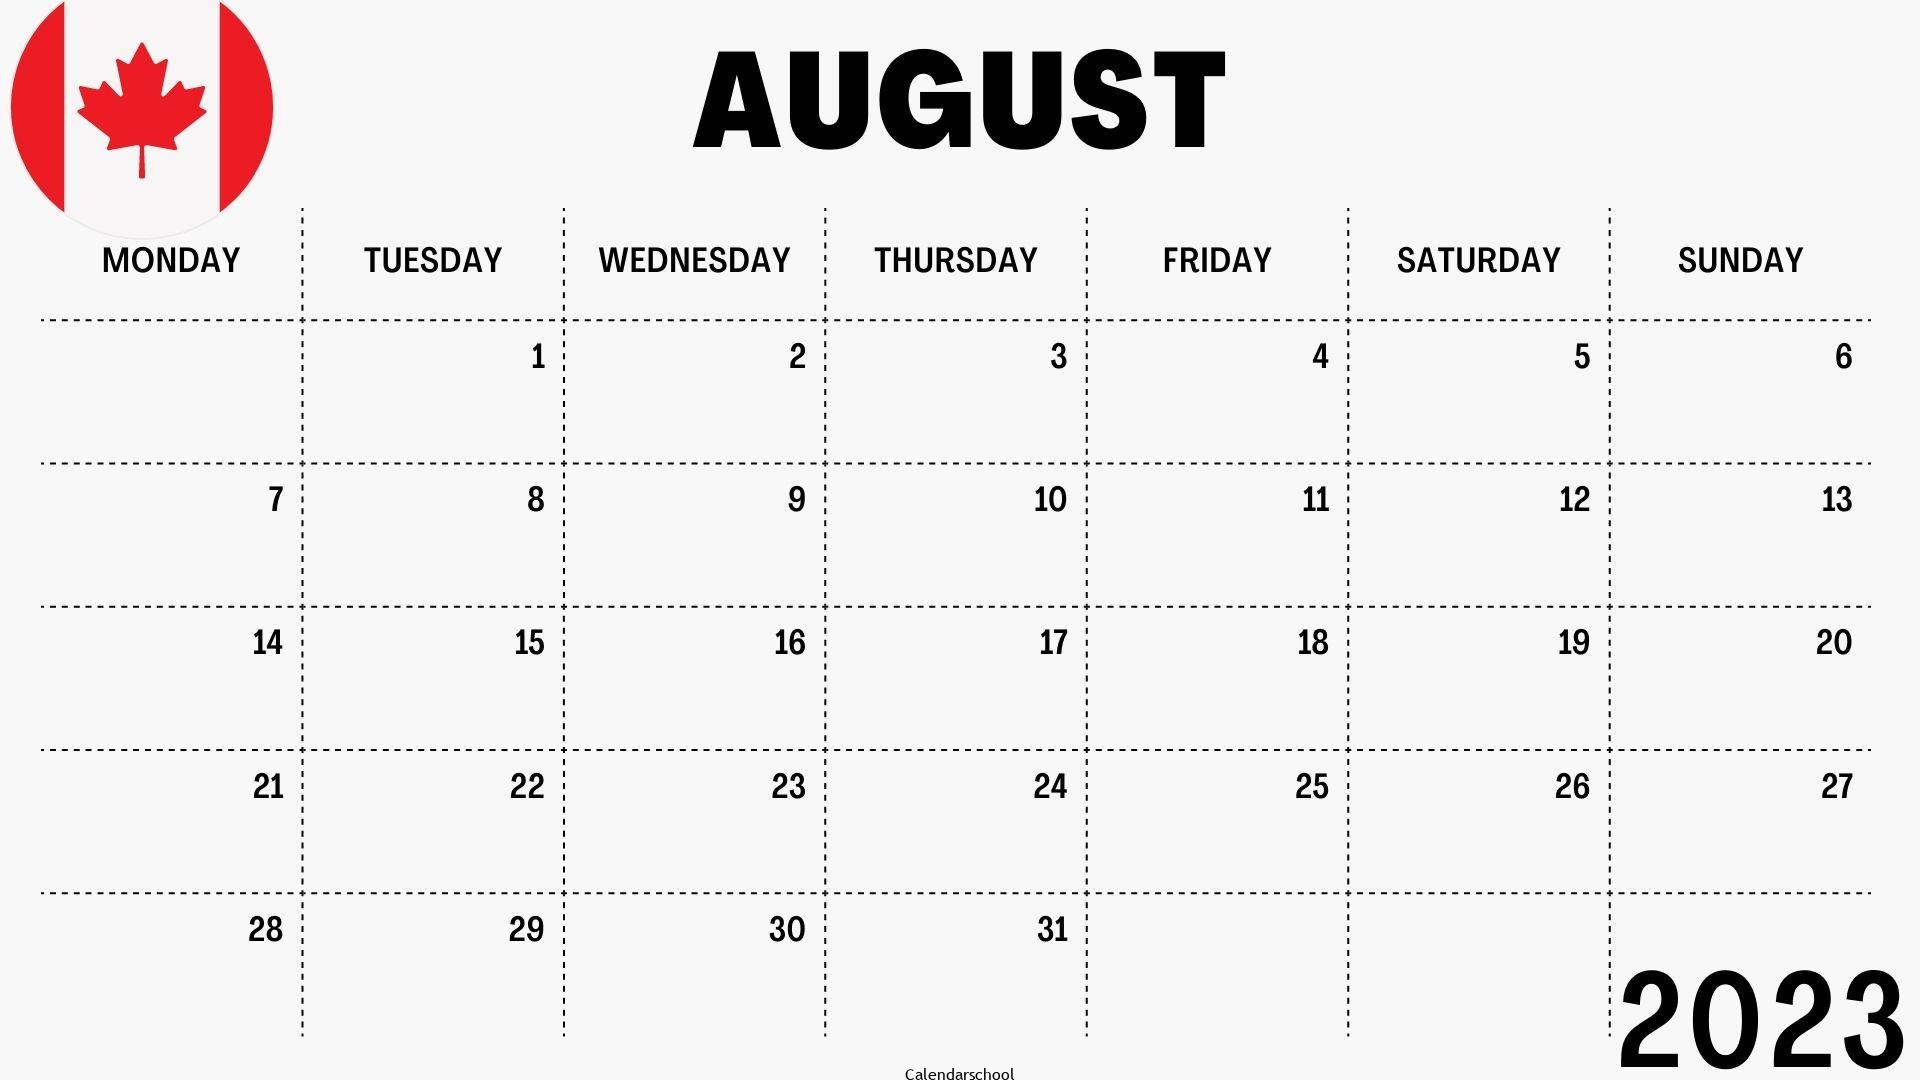 August 2023 Calendar with Holidays Canada